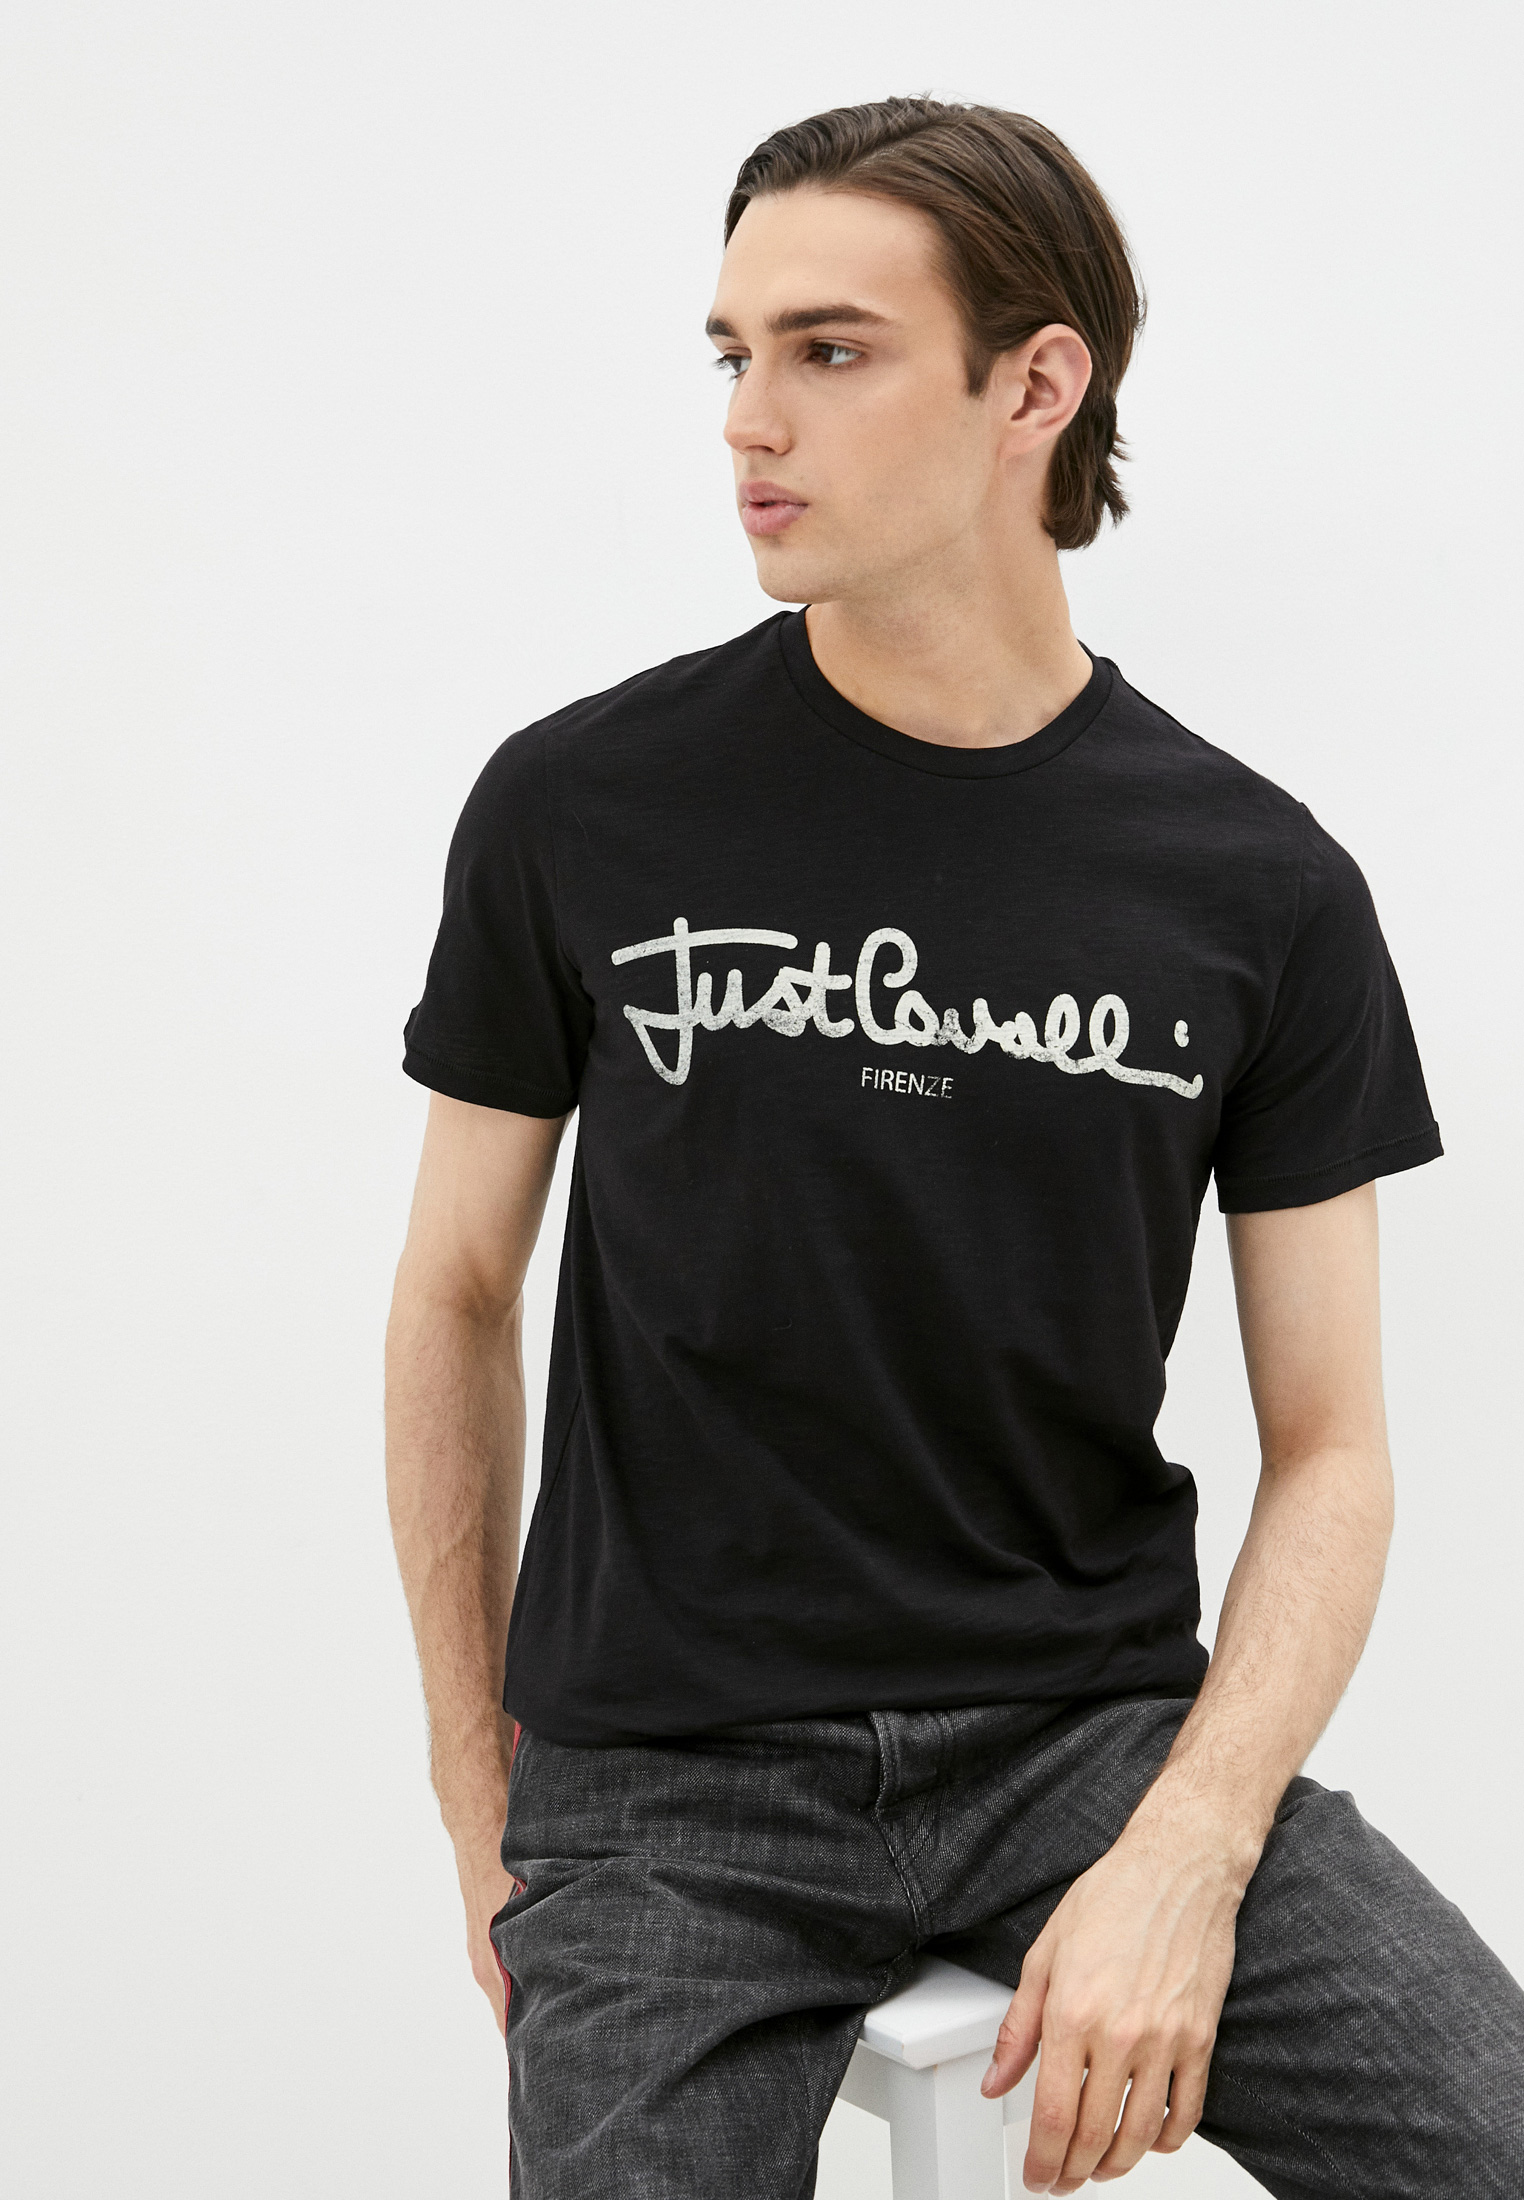 Мужская футболка Just Cavalli (Джаст Кавалли) S03GC0397N21193: изображение 1